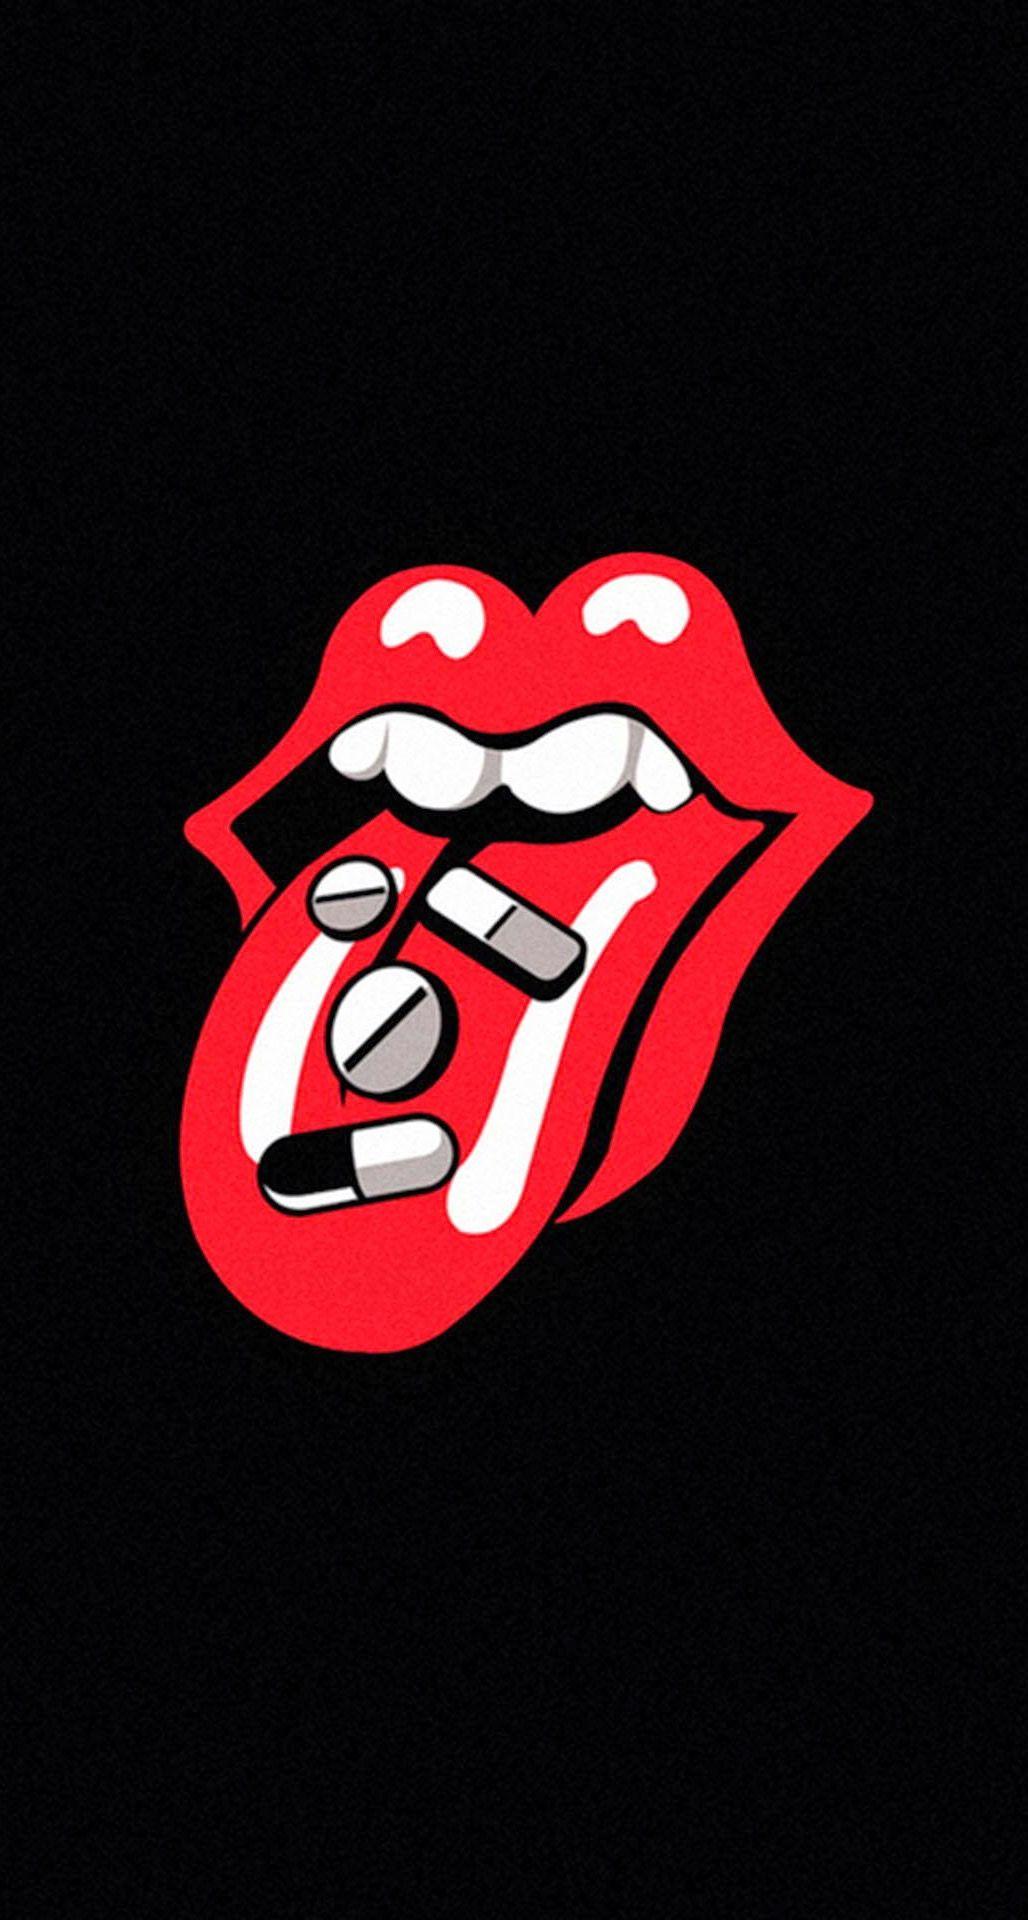 Rolling Stones Tongue Pills Drugs iPhone 6 Plus HD Wallpaper